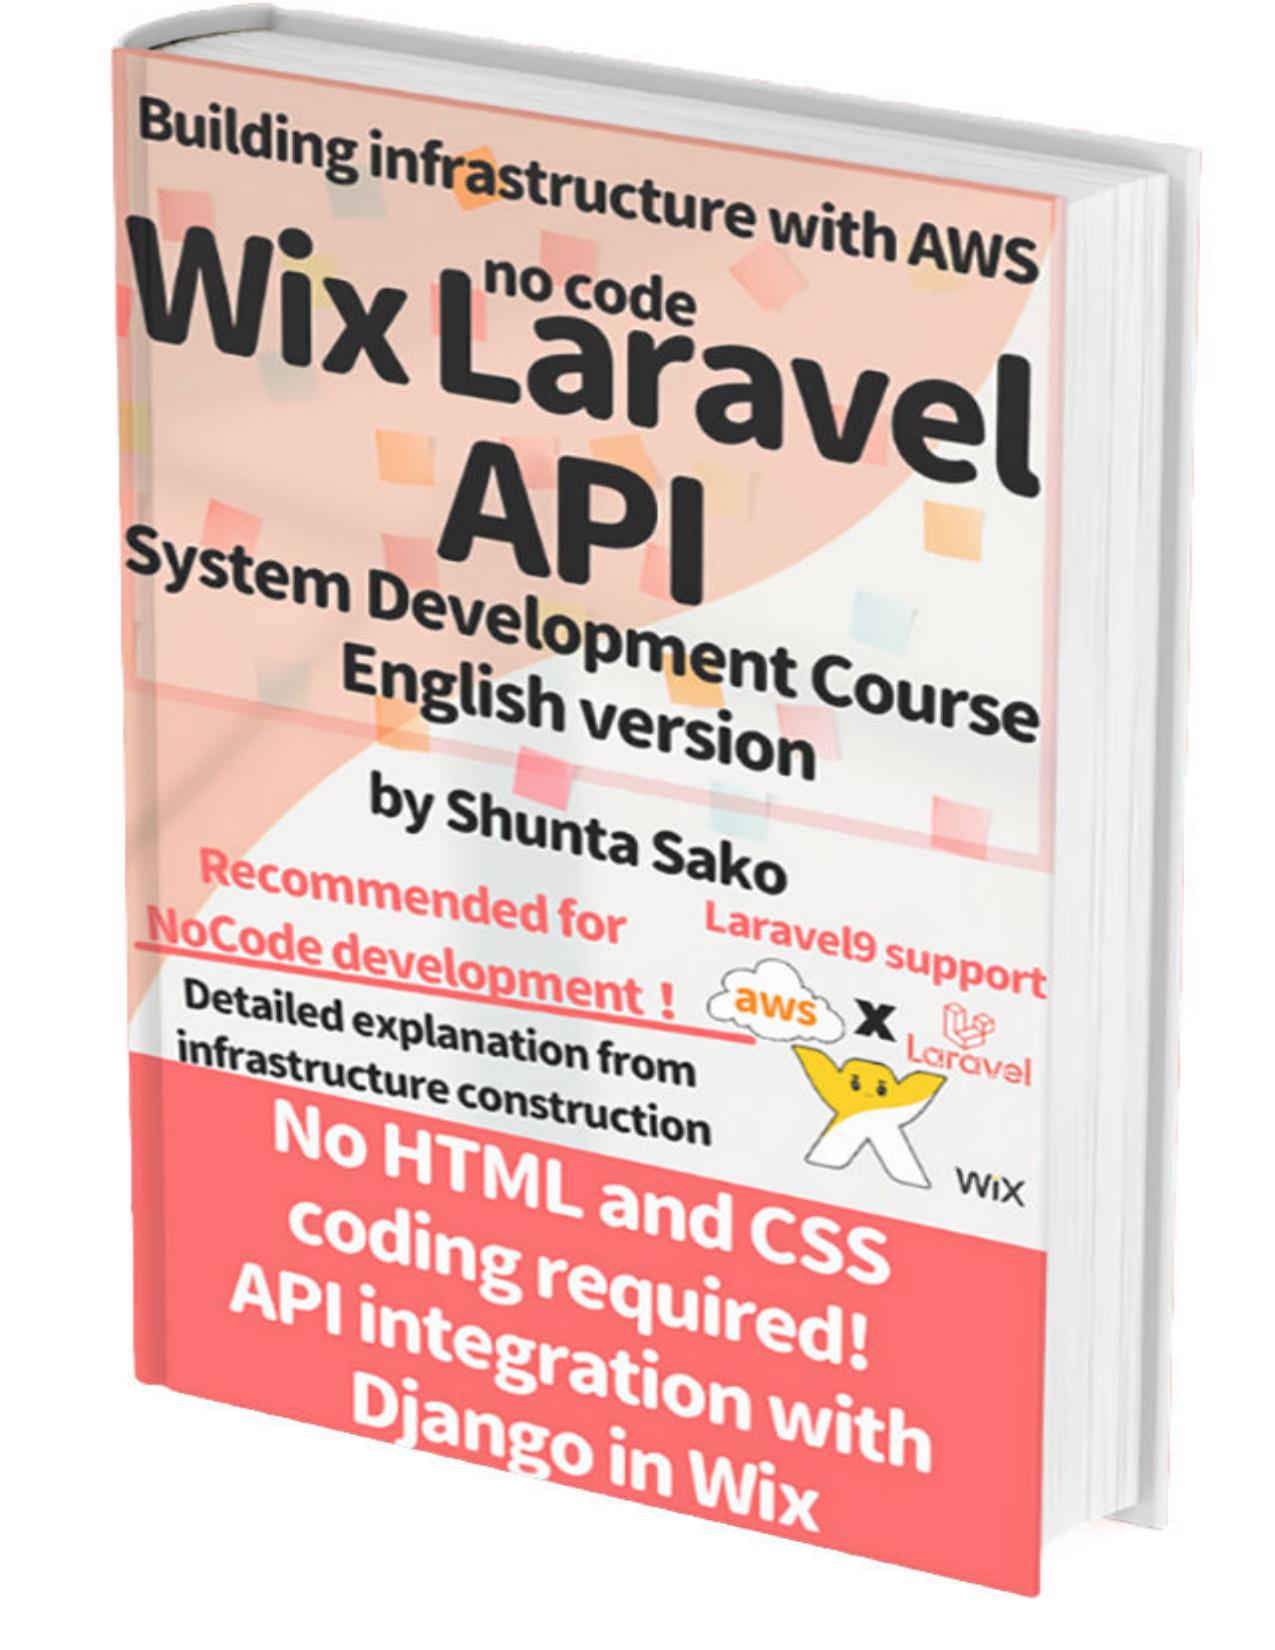 Wix Laravel API System Development Course English Version